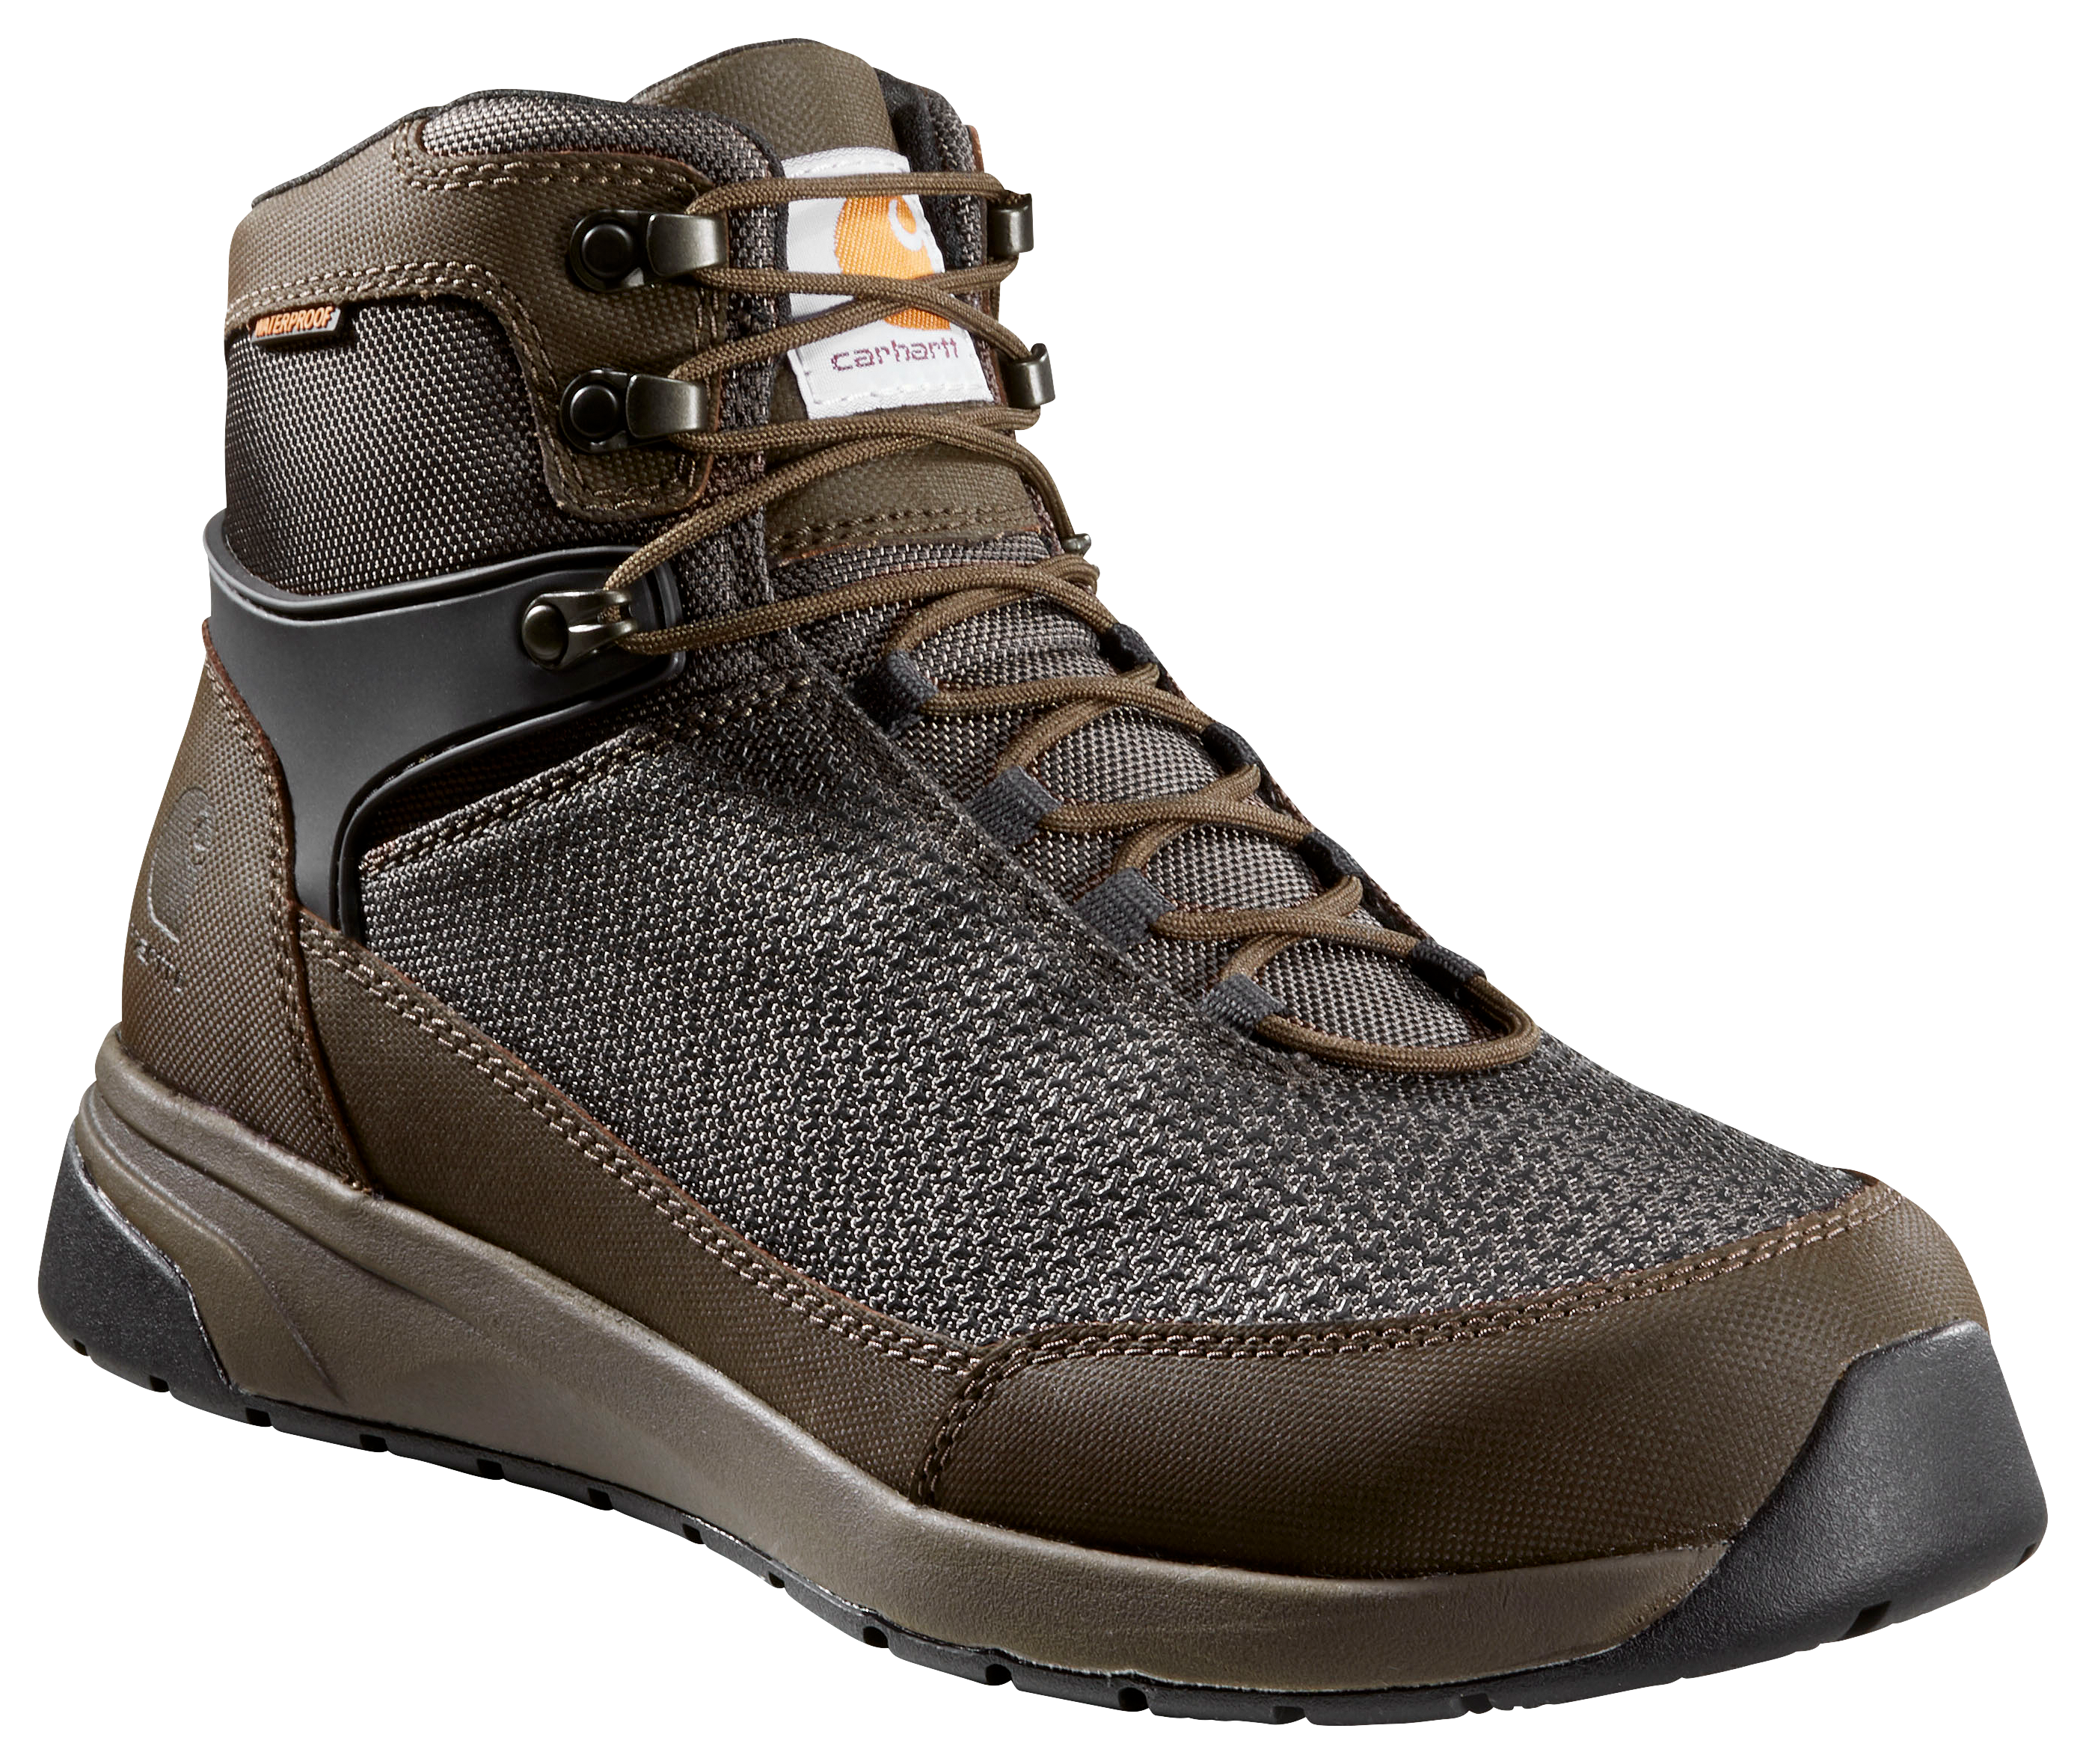 Carhartt Force 6"" Nano Composite-Toe Work Boots for Men - Espresso - 11W